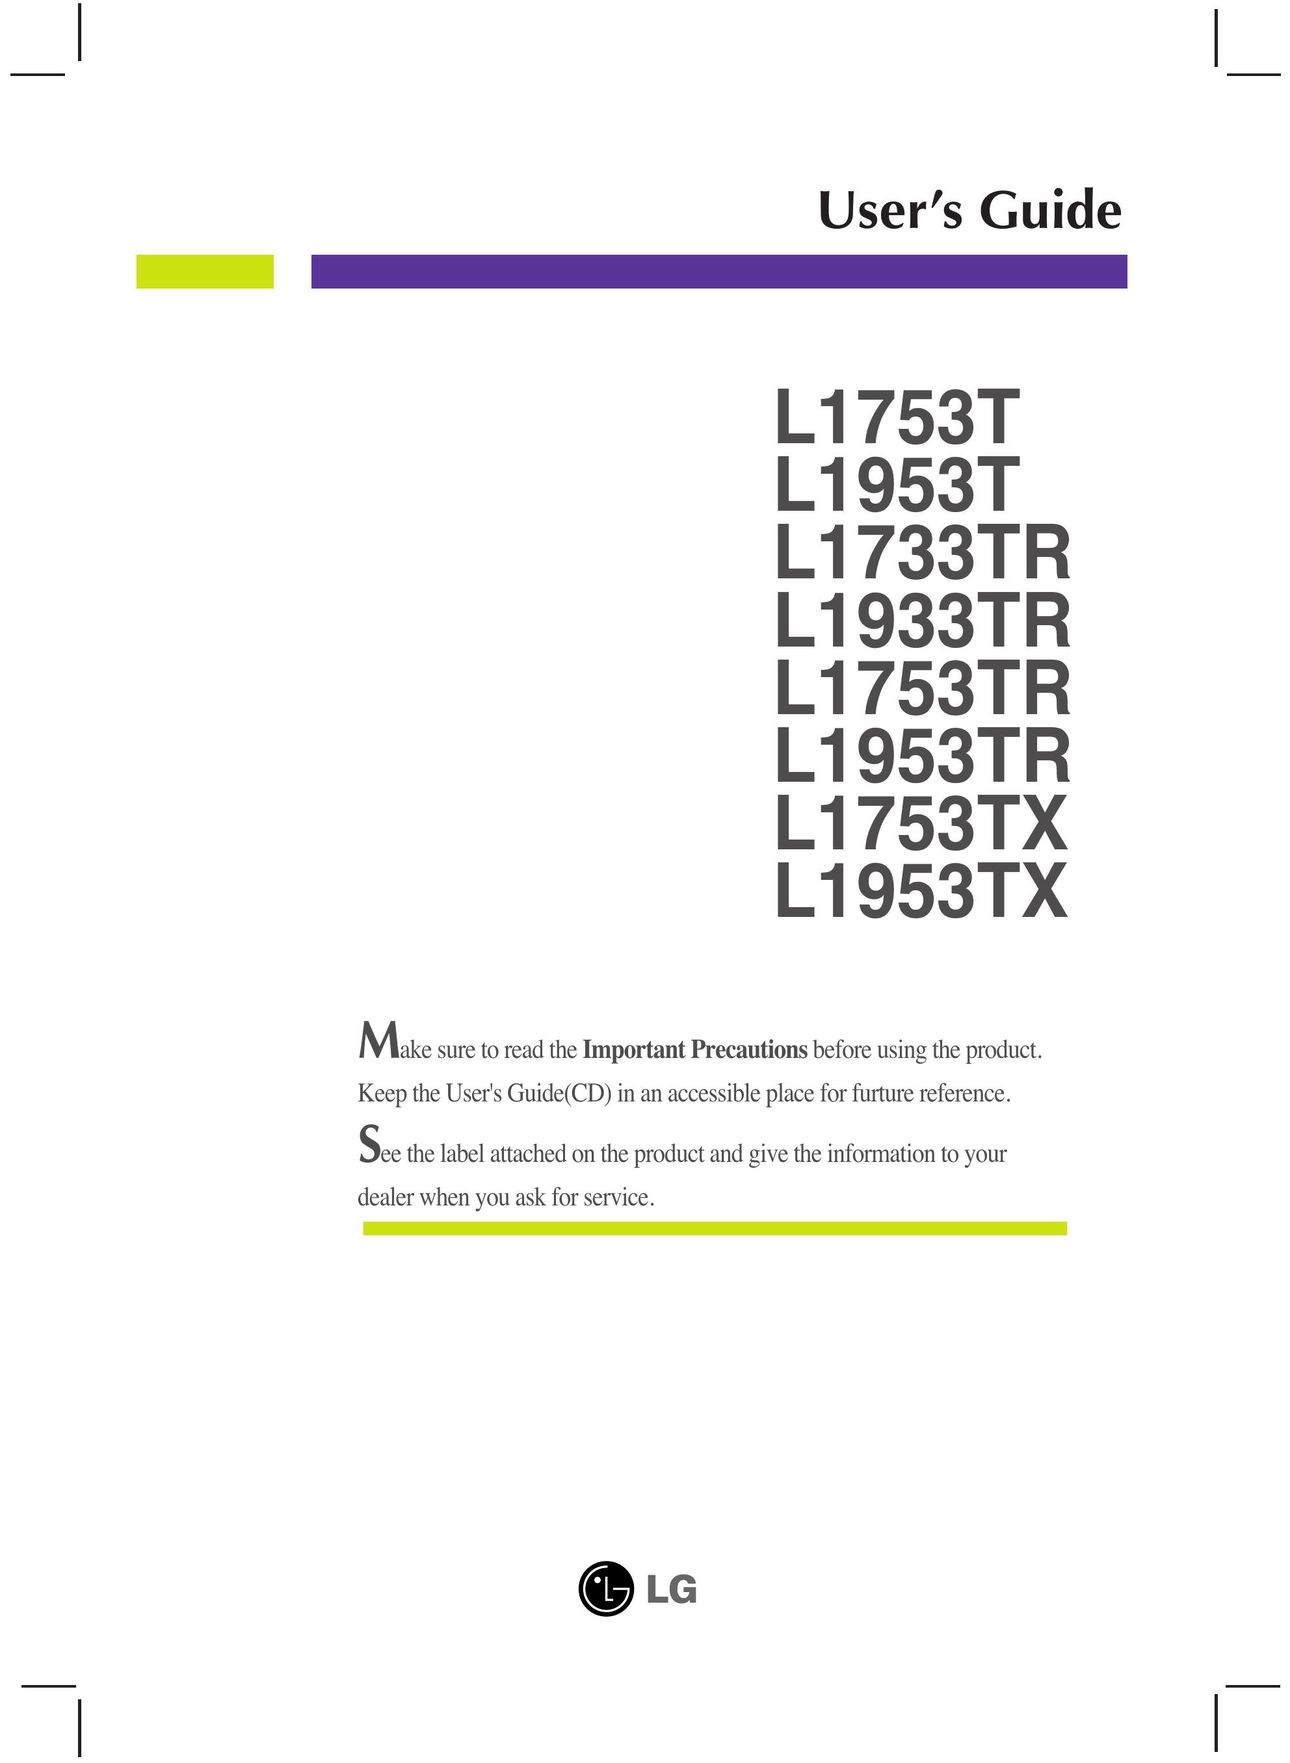 LG Electronics L1733TR CD Player User Manual